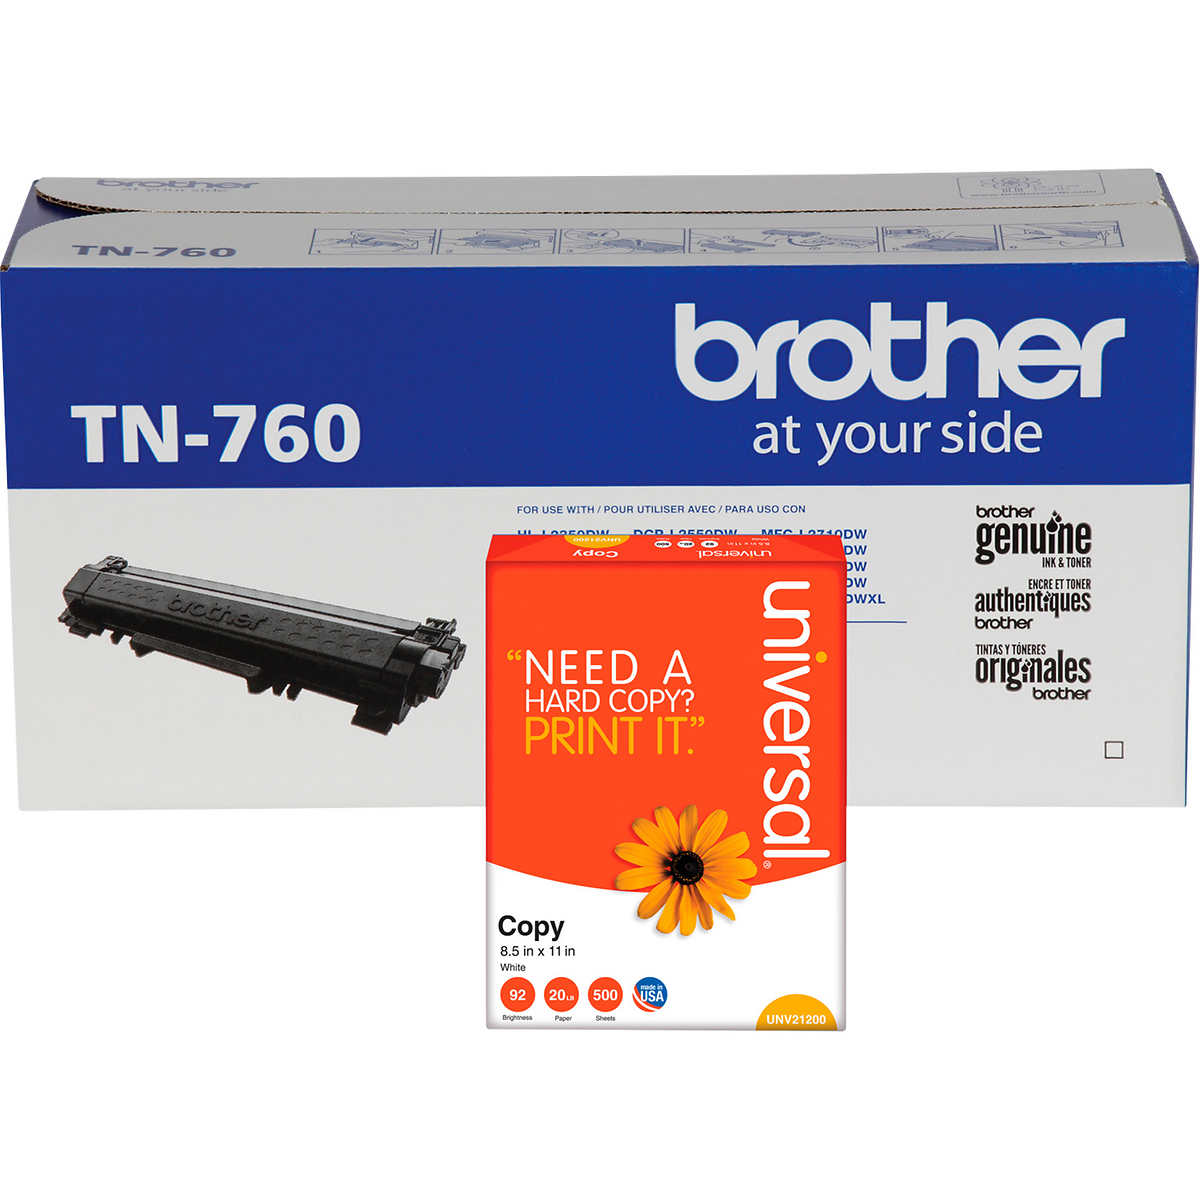 Order Brother TN-760 OEM HY Toner Cartridge, 3K pages, Black at